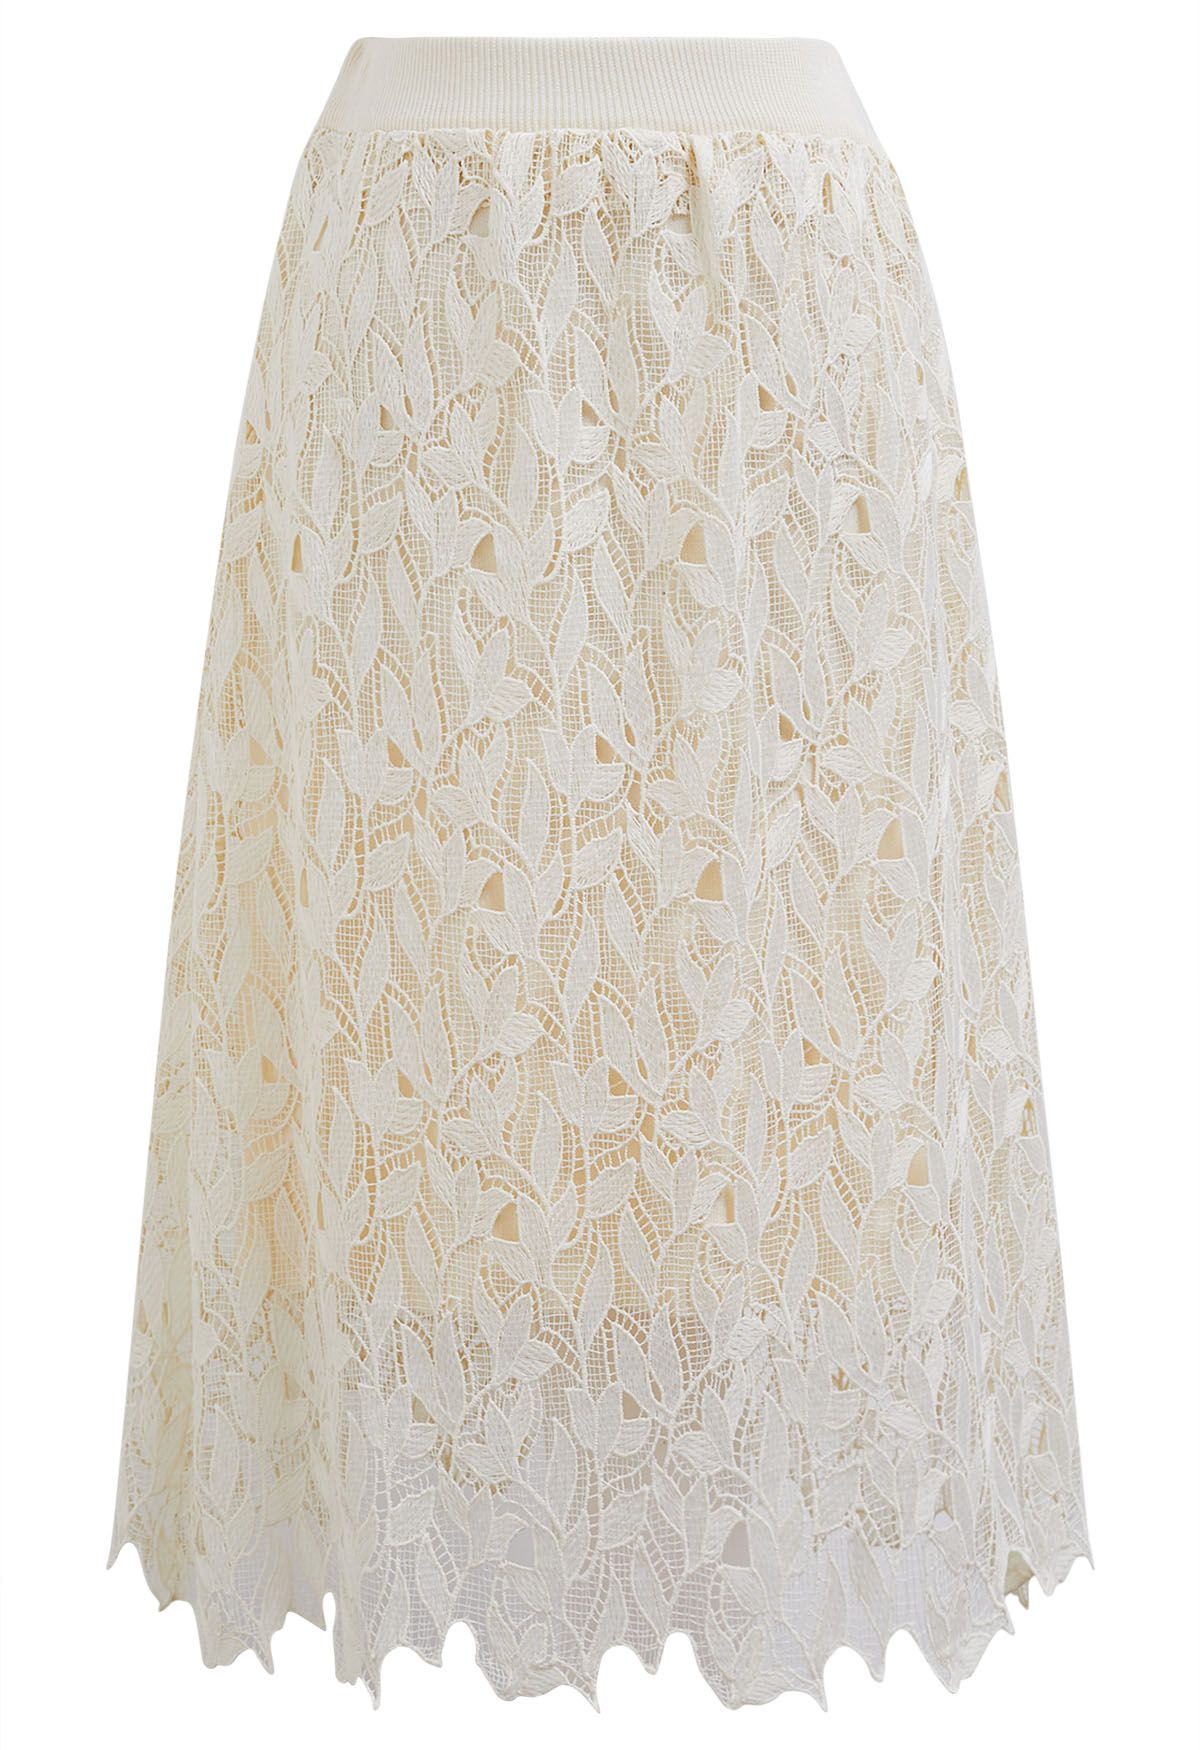 Cutwork Lace Overlay Knit Midi Skirt in Cream